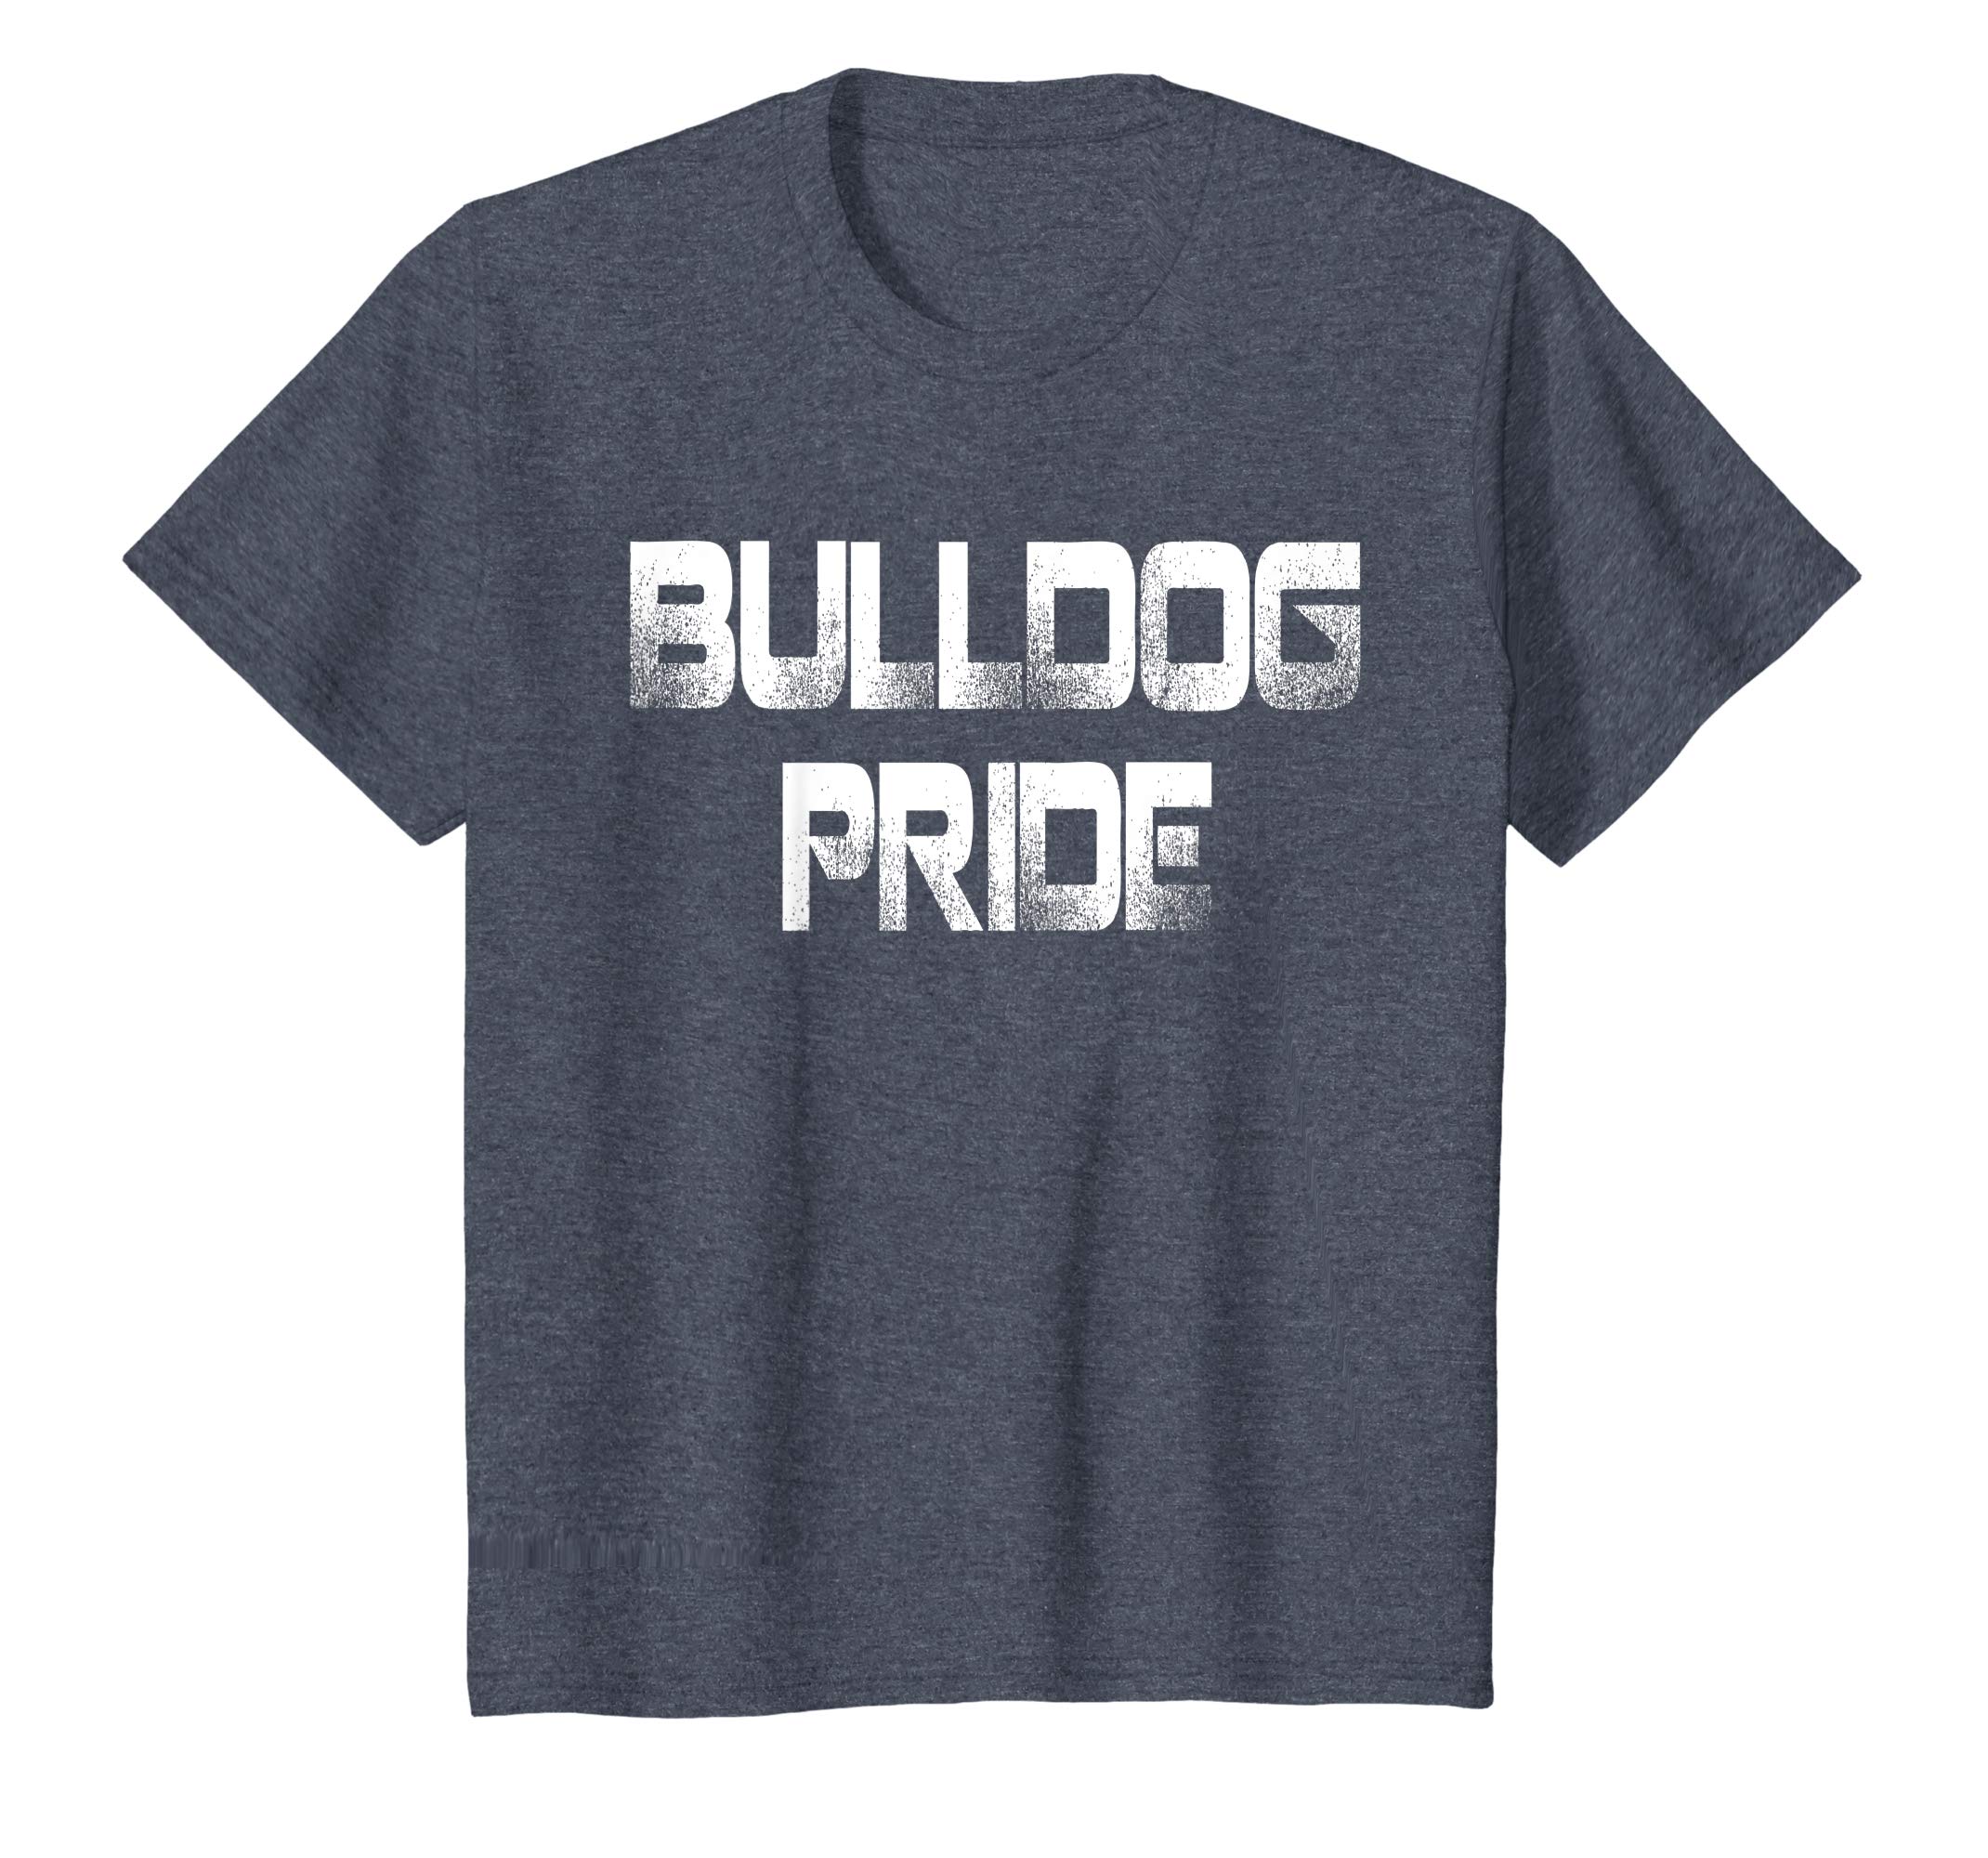 Blue Bulldog Pride Logo - Amazon.com: Bulldog Pride T Shirt for Sports School Spirit Shirt Tee ...